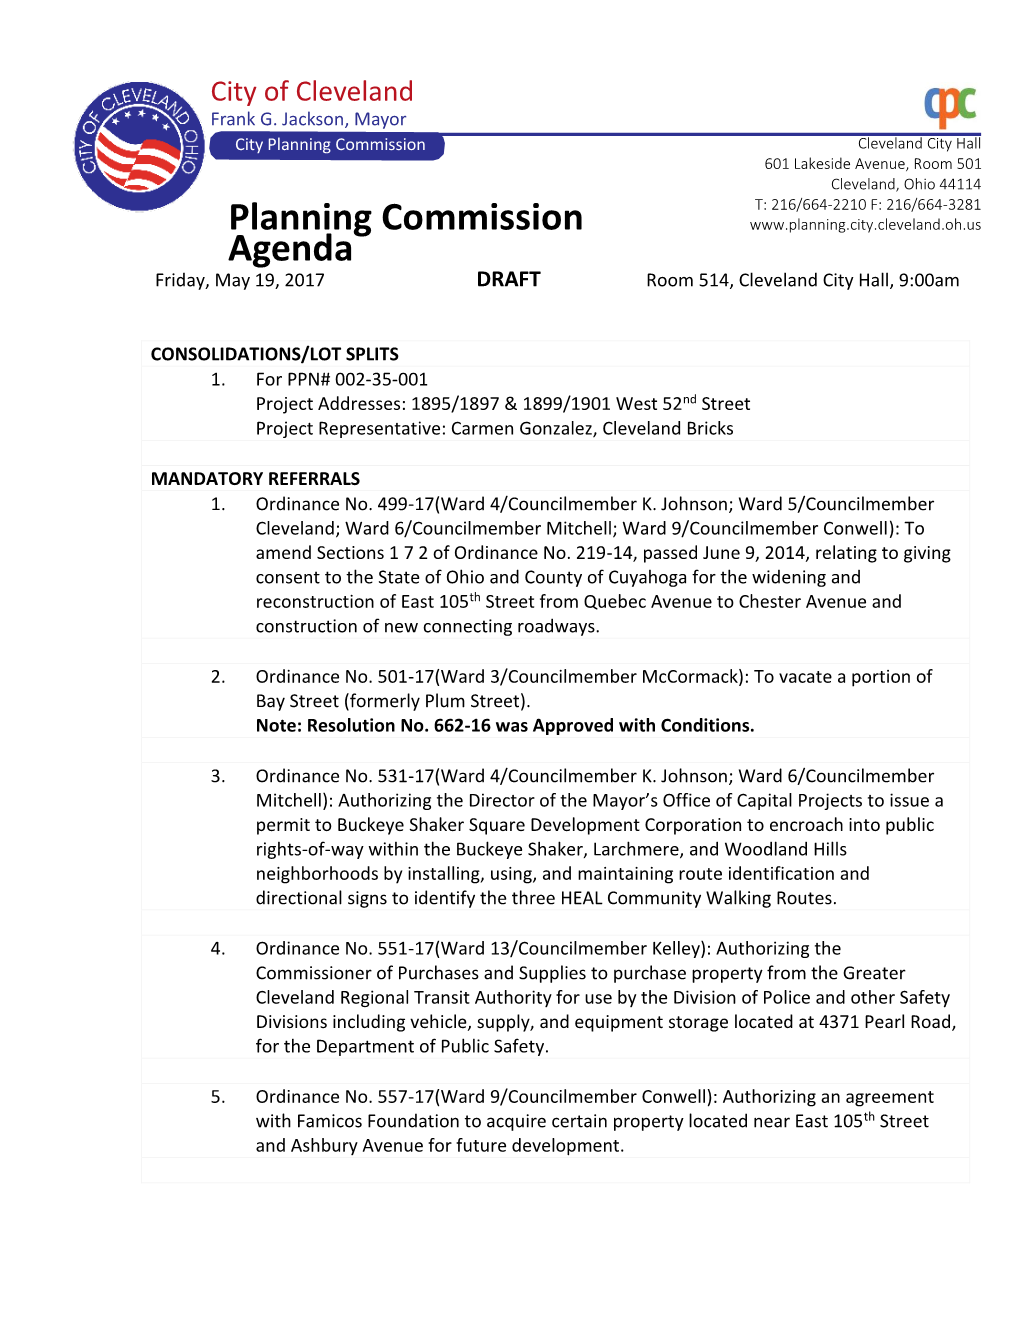 Planning Commission Agenda